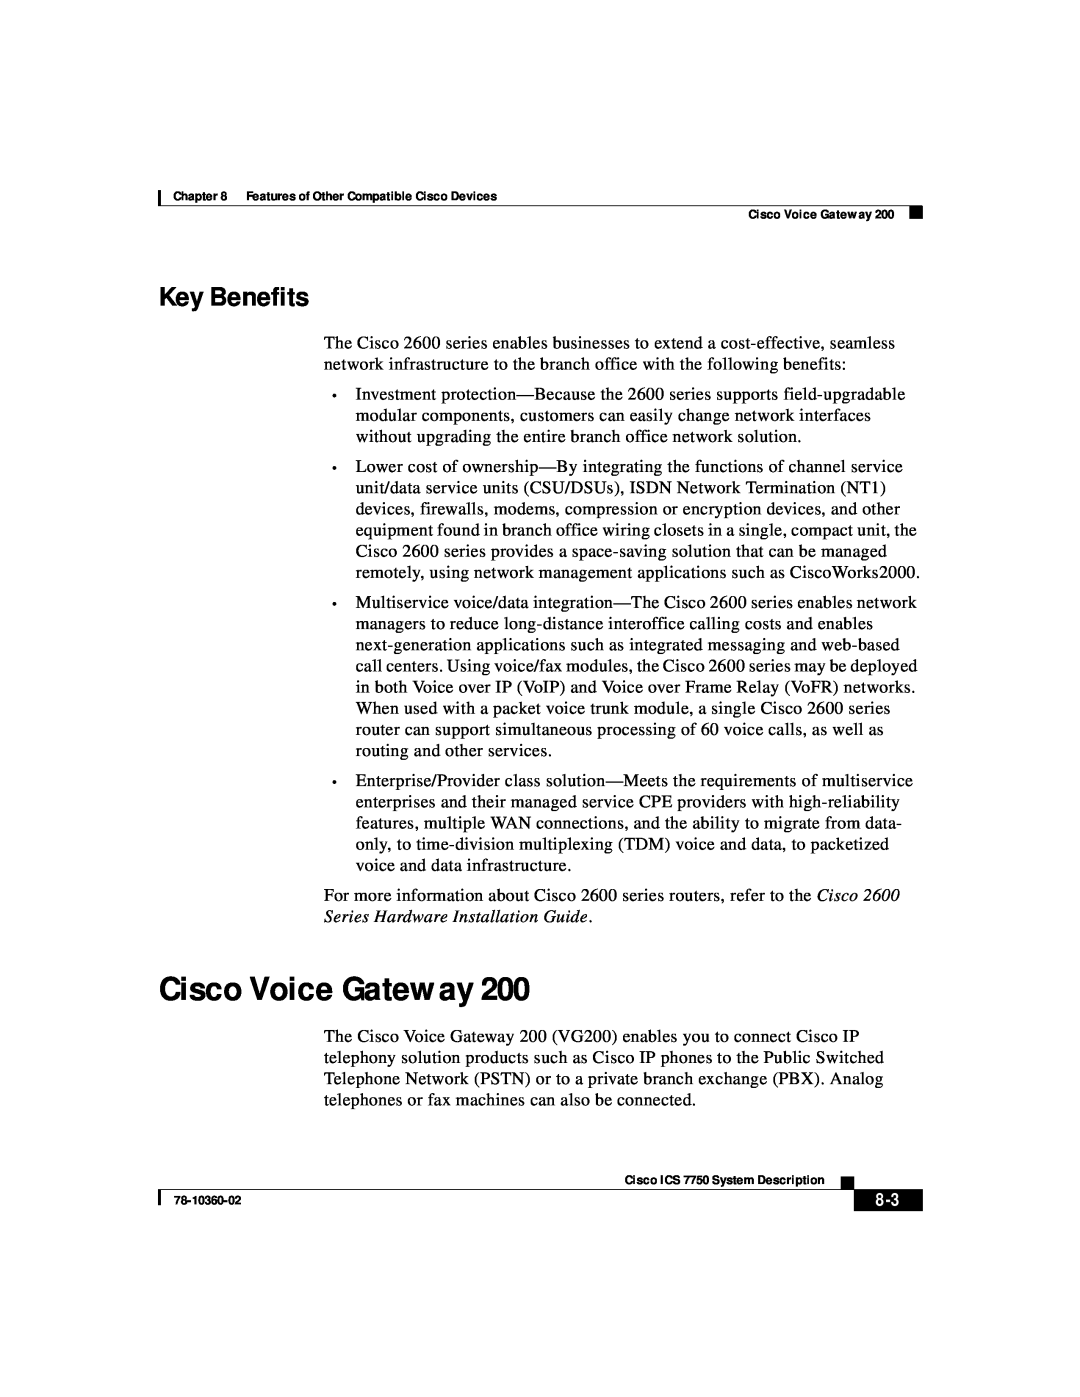 Cisco Systems ICS-7750 manual Cisco Voice Gateway, Key Benefits 